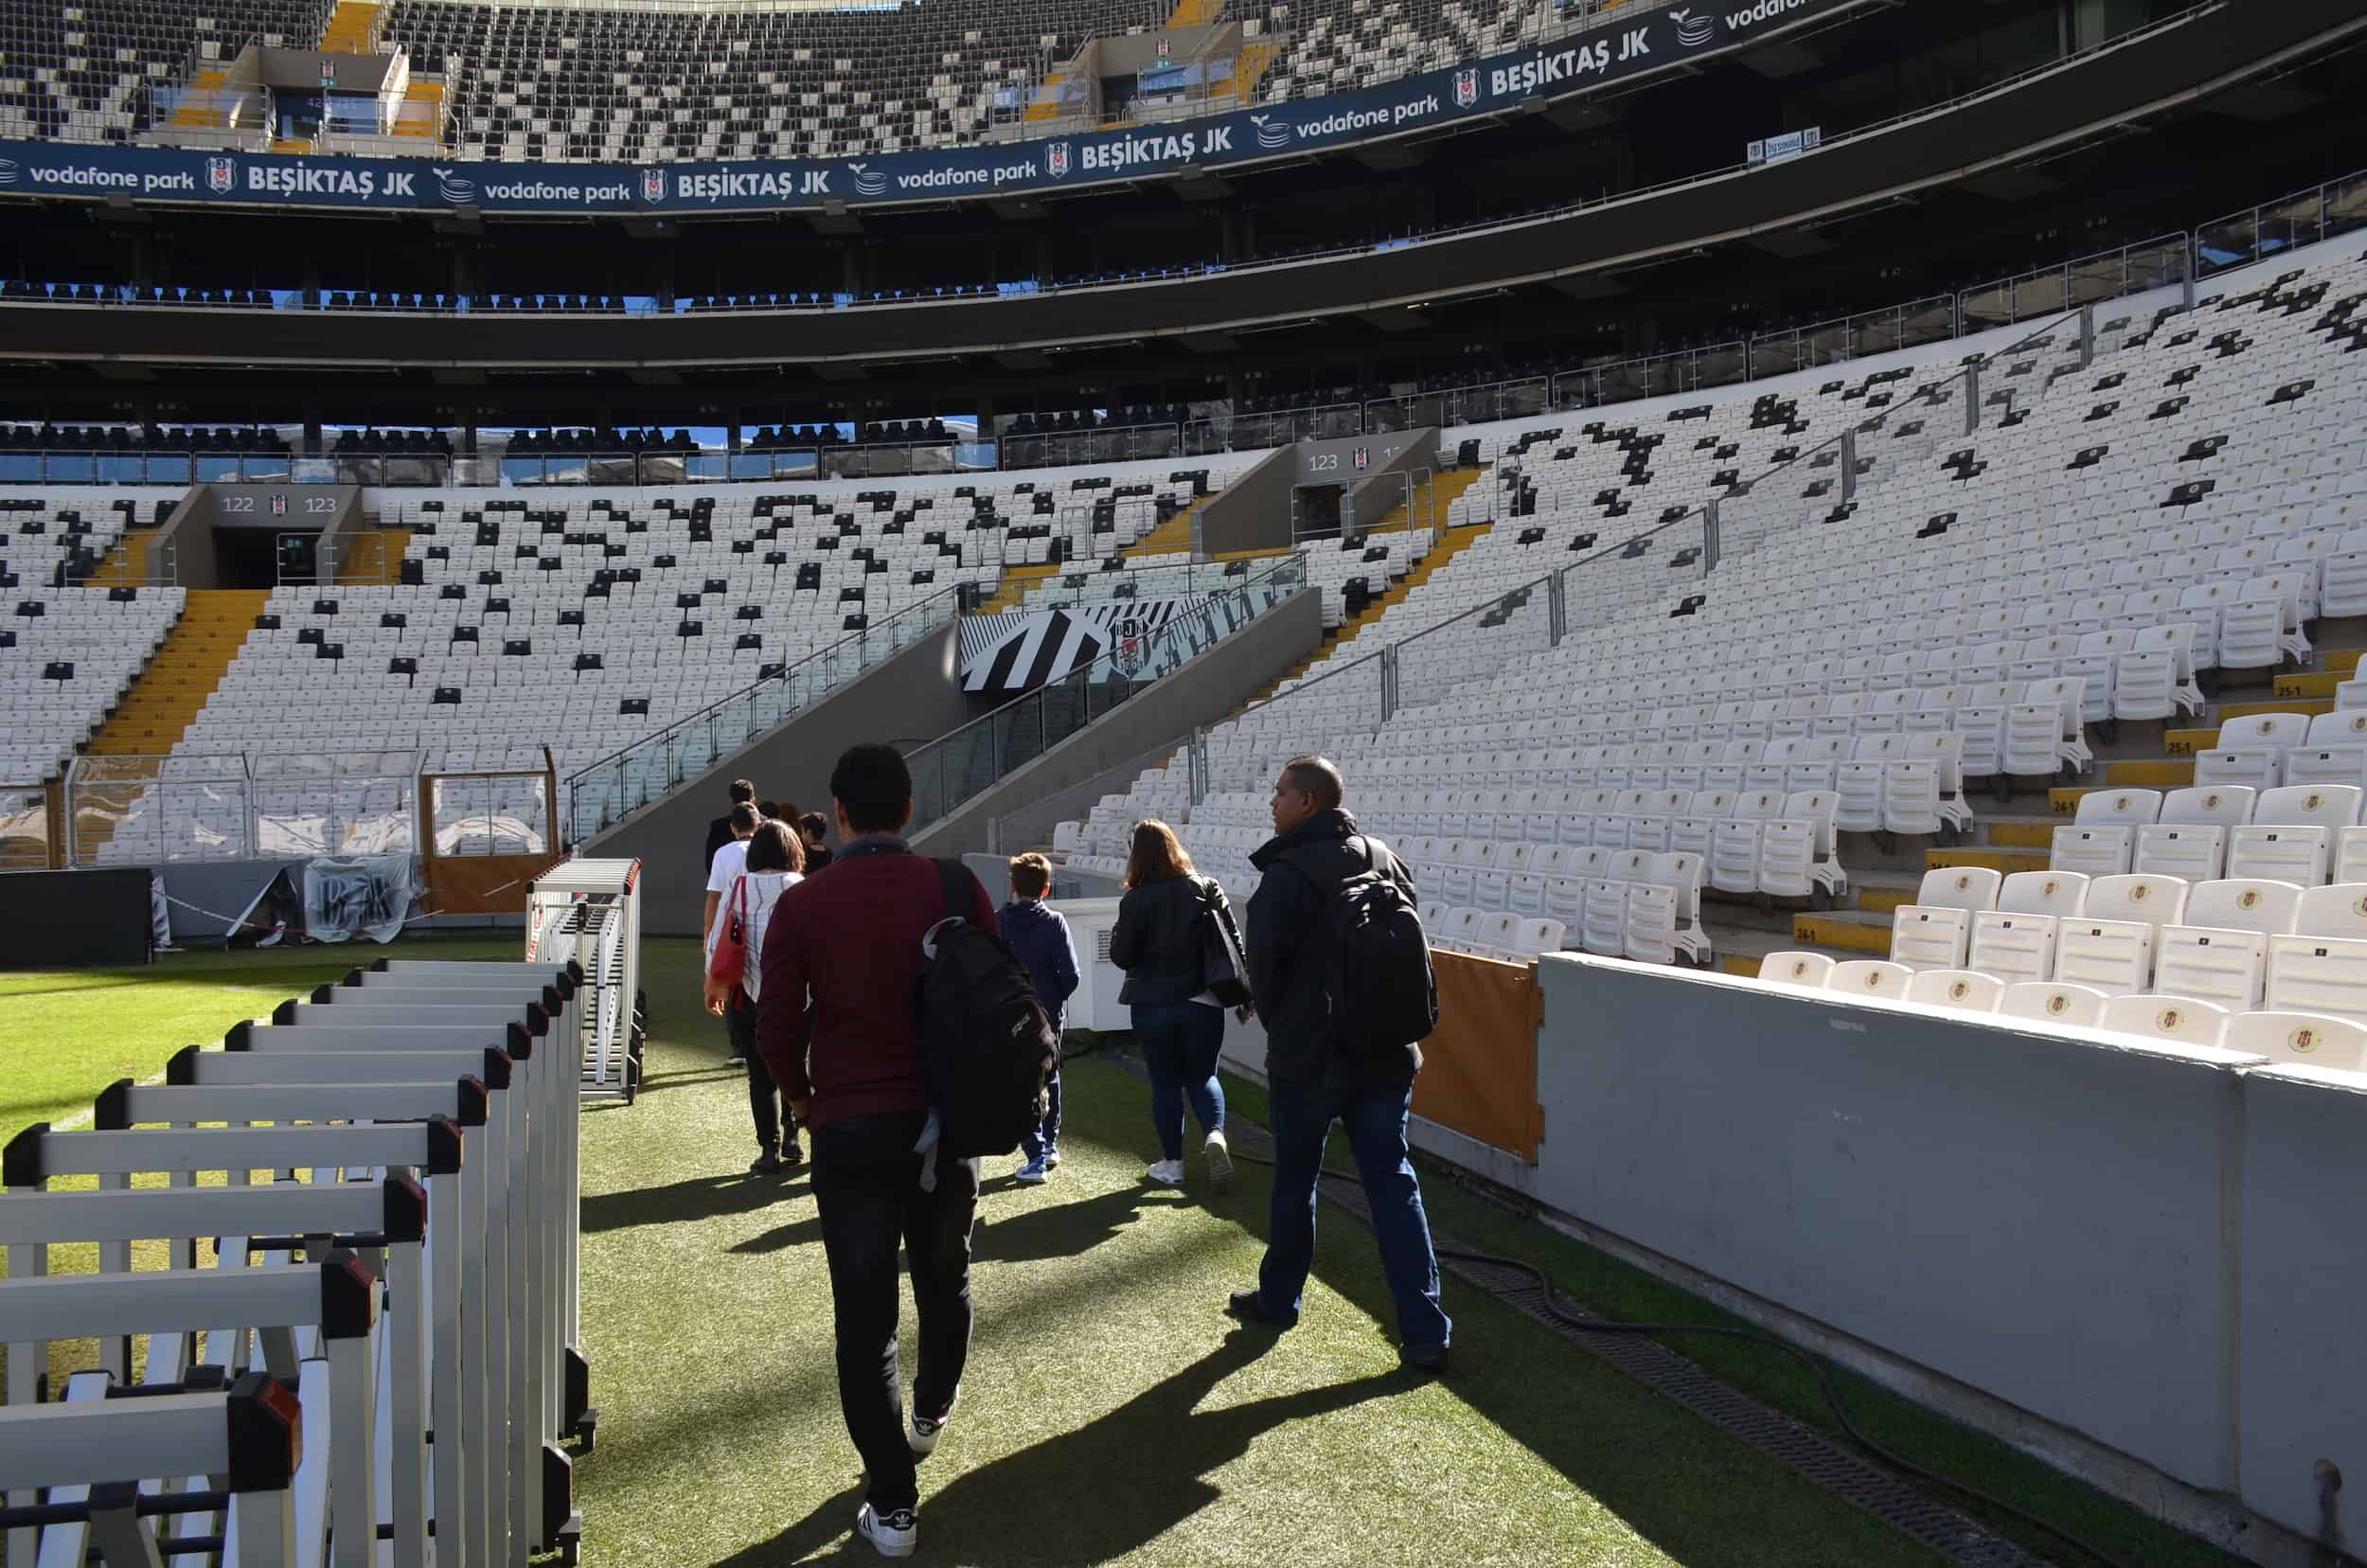 Walking down the sideline at Beşiktaş Stadium in Istanbul, Turkey